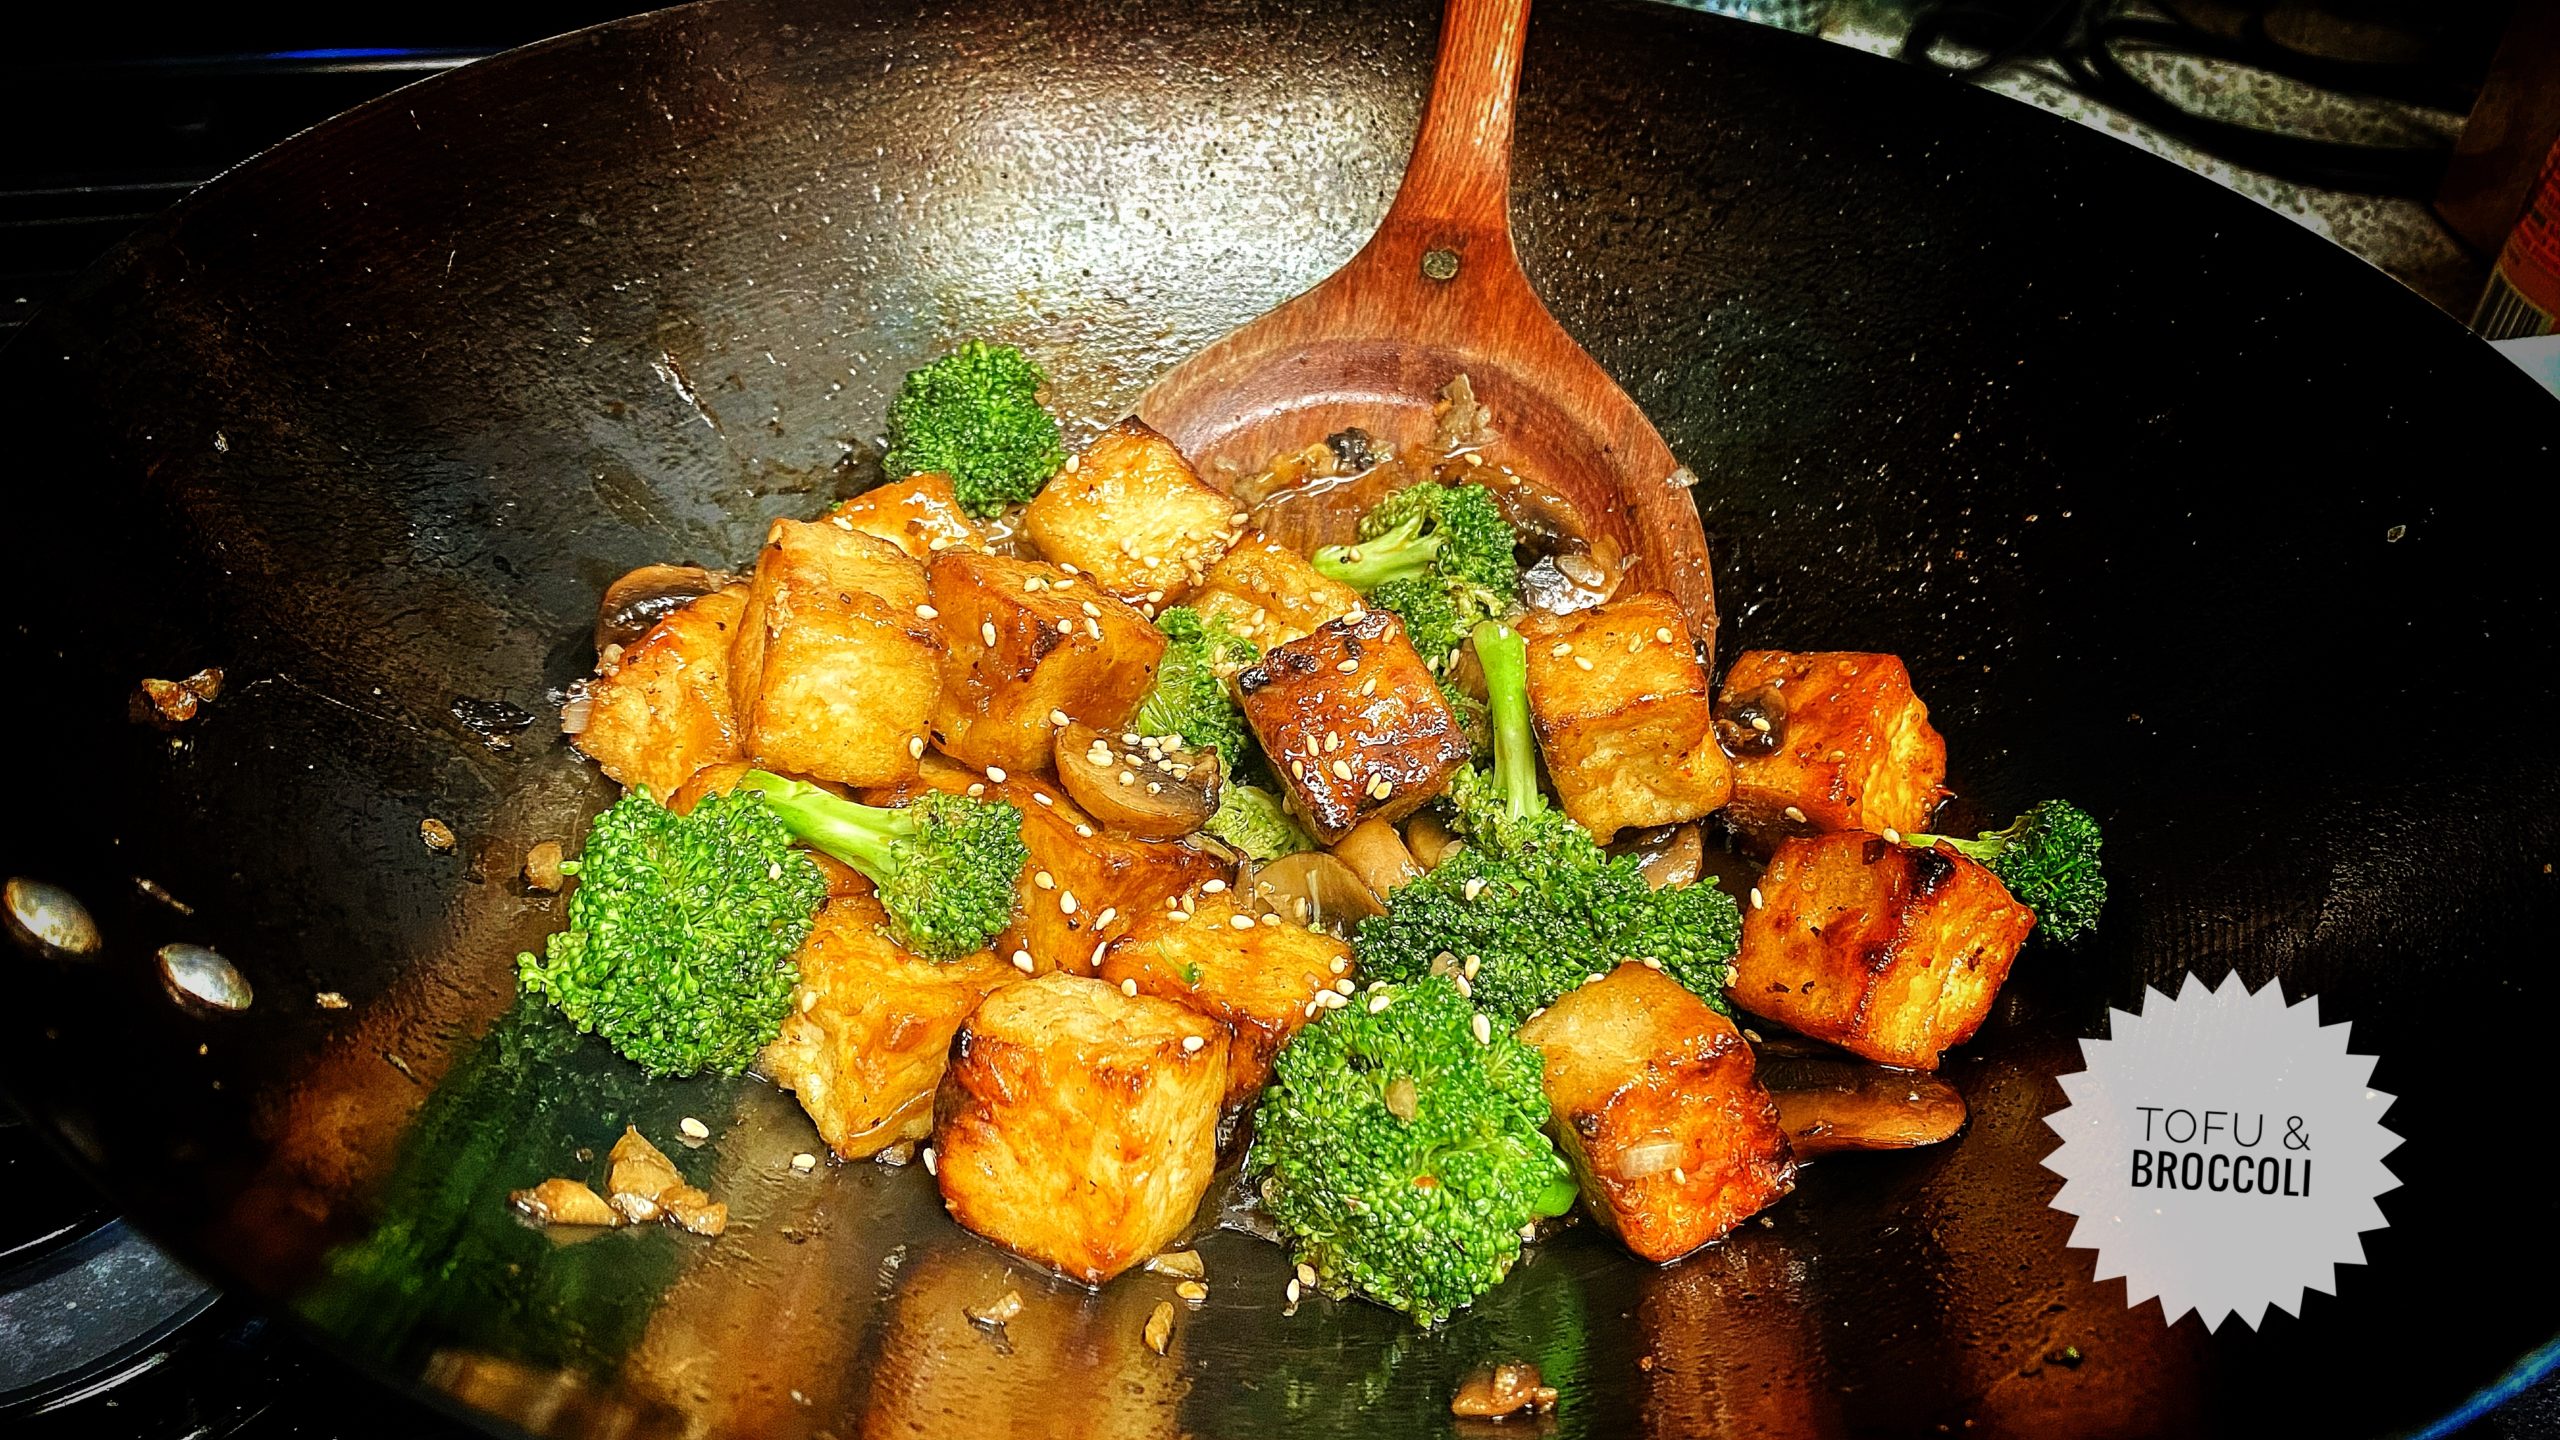 Tofu & Broccoli (Vegan)